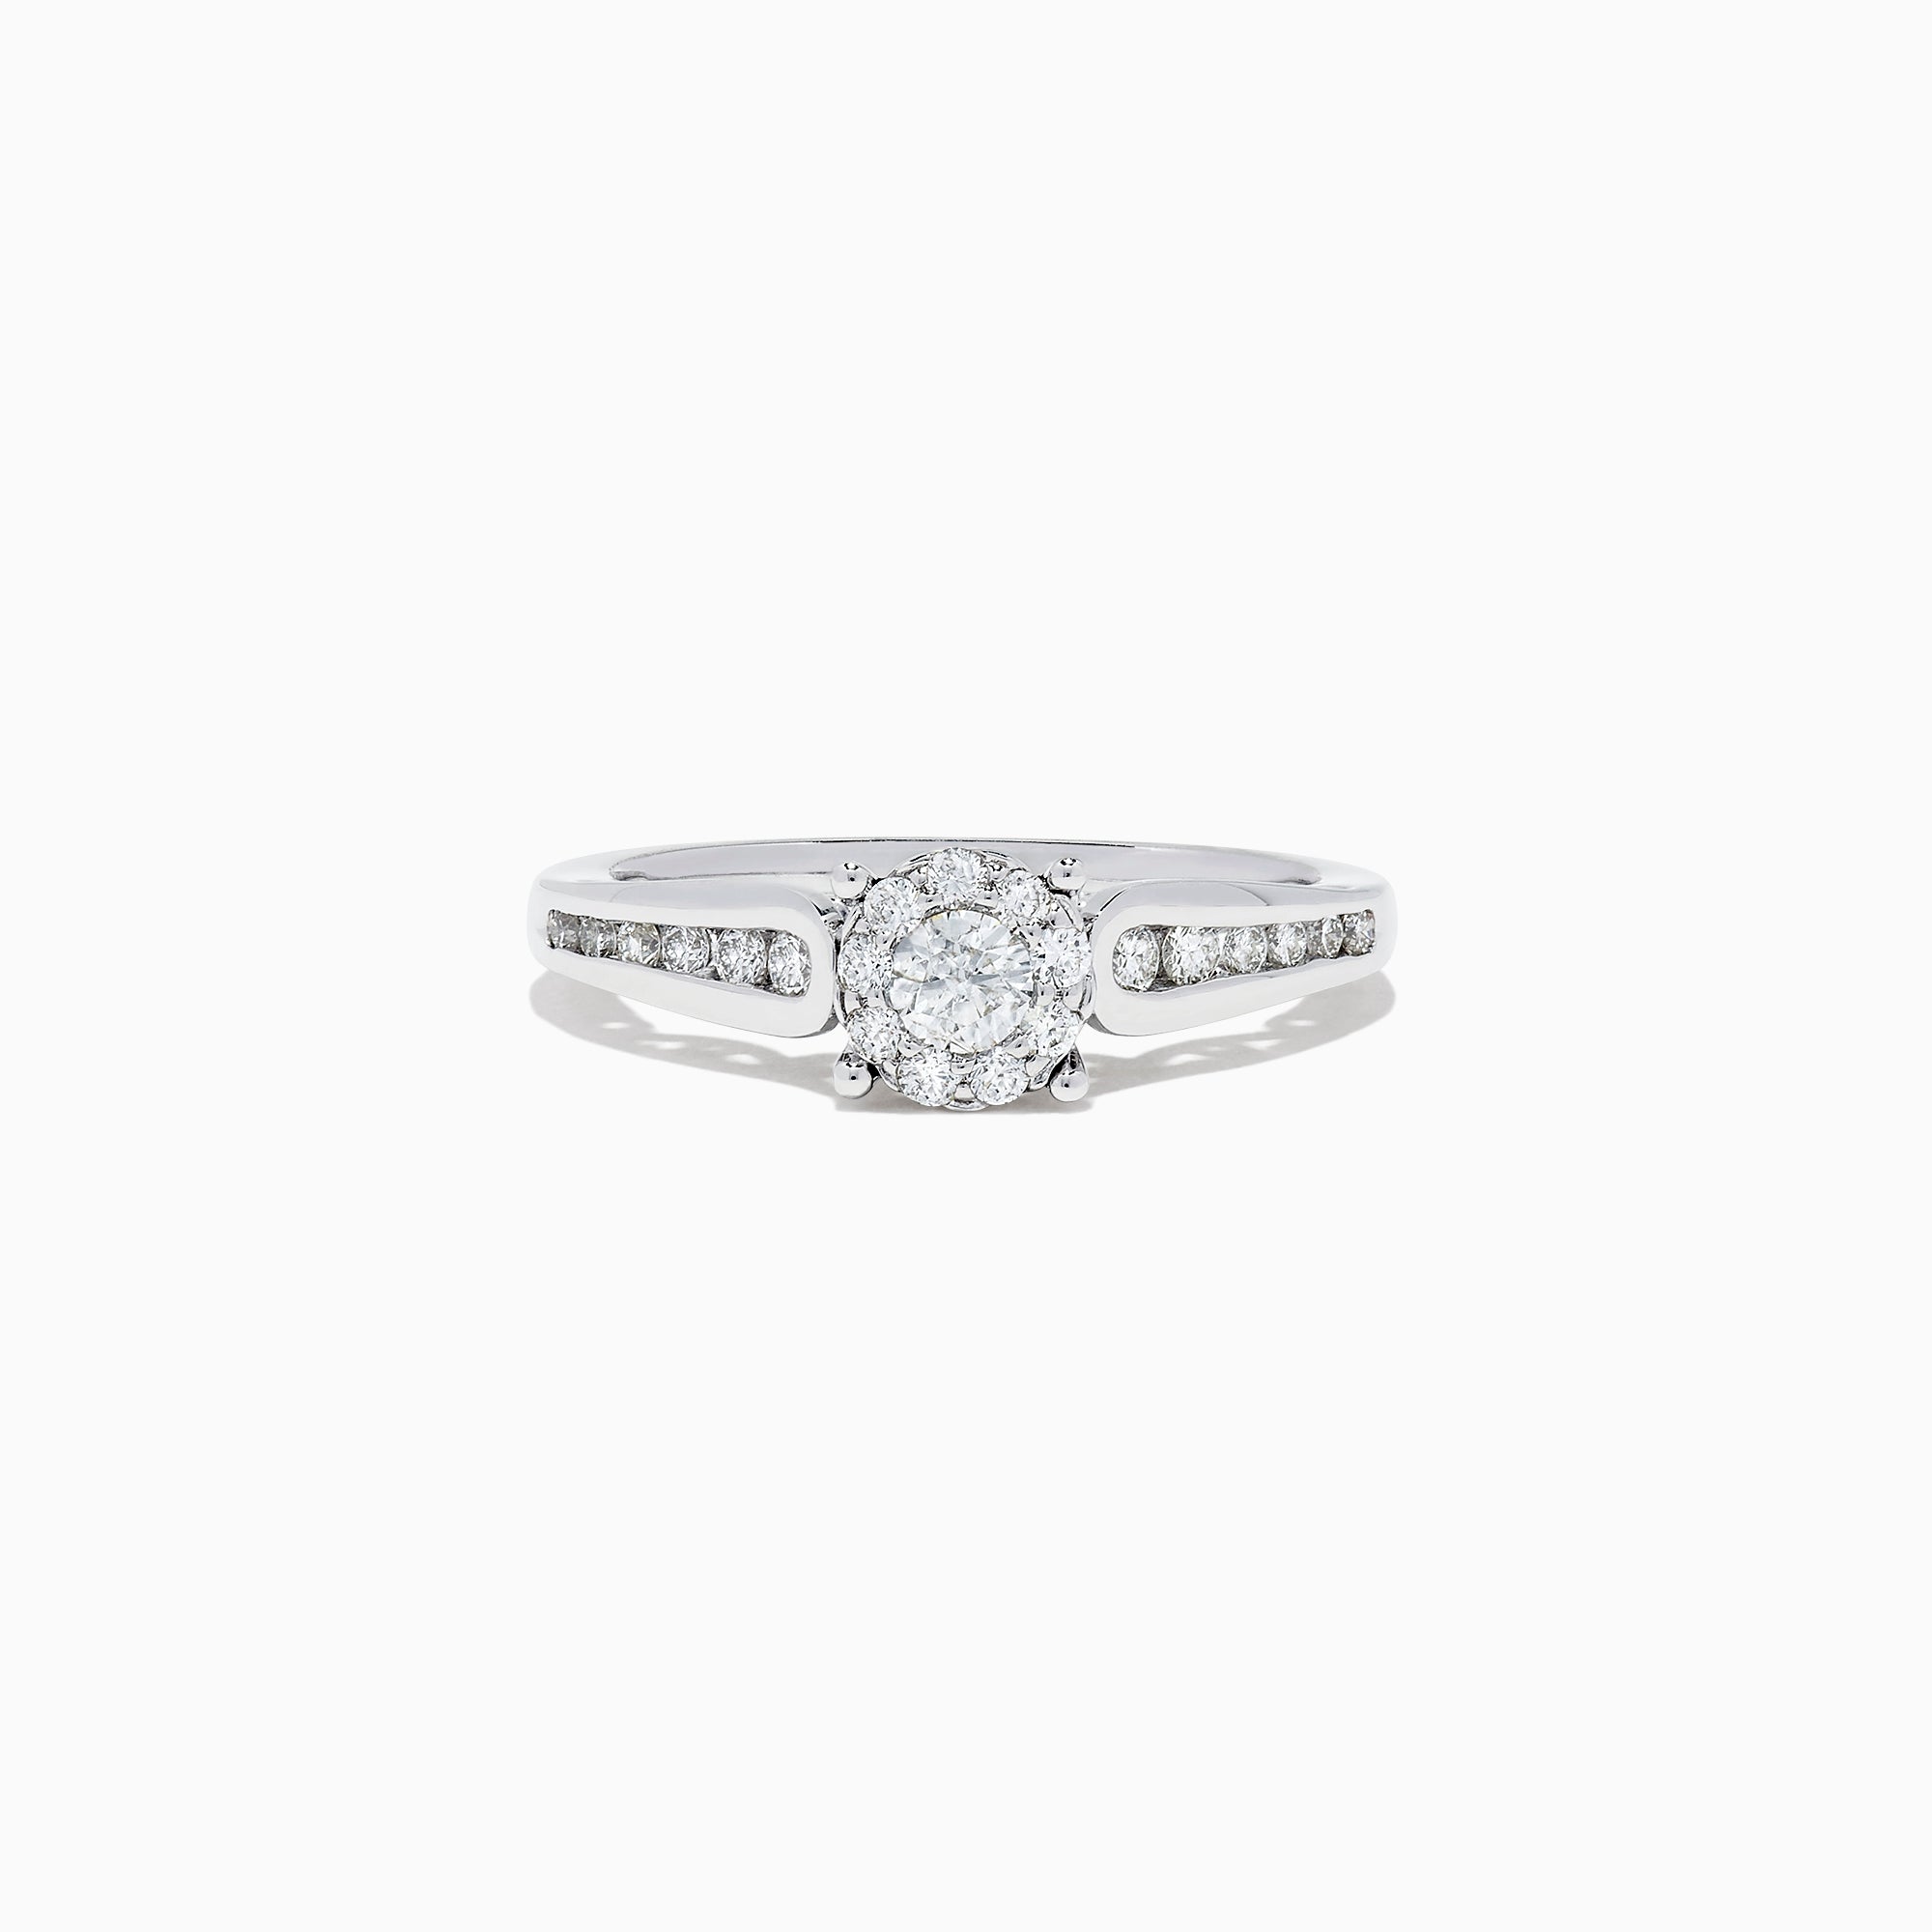 Effy Bridal 14K White Gold Diamond Cluster Ring and Band Set, 0.72 TCW